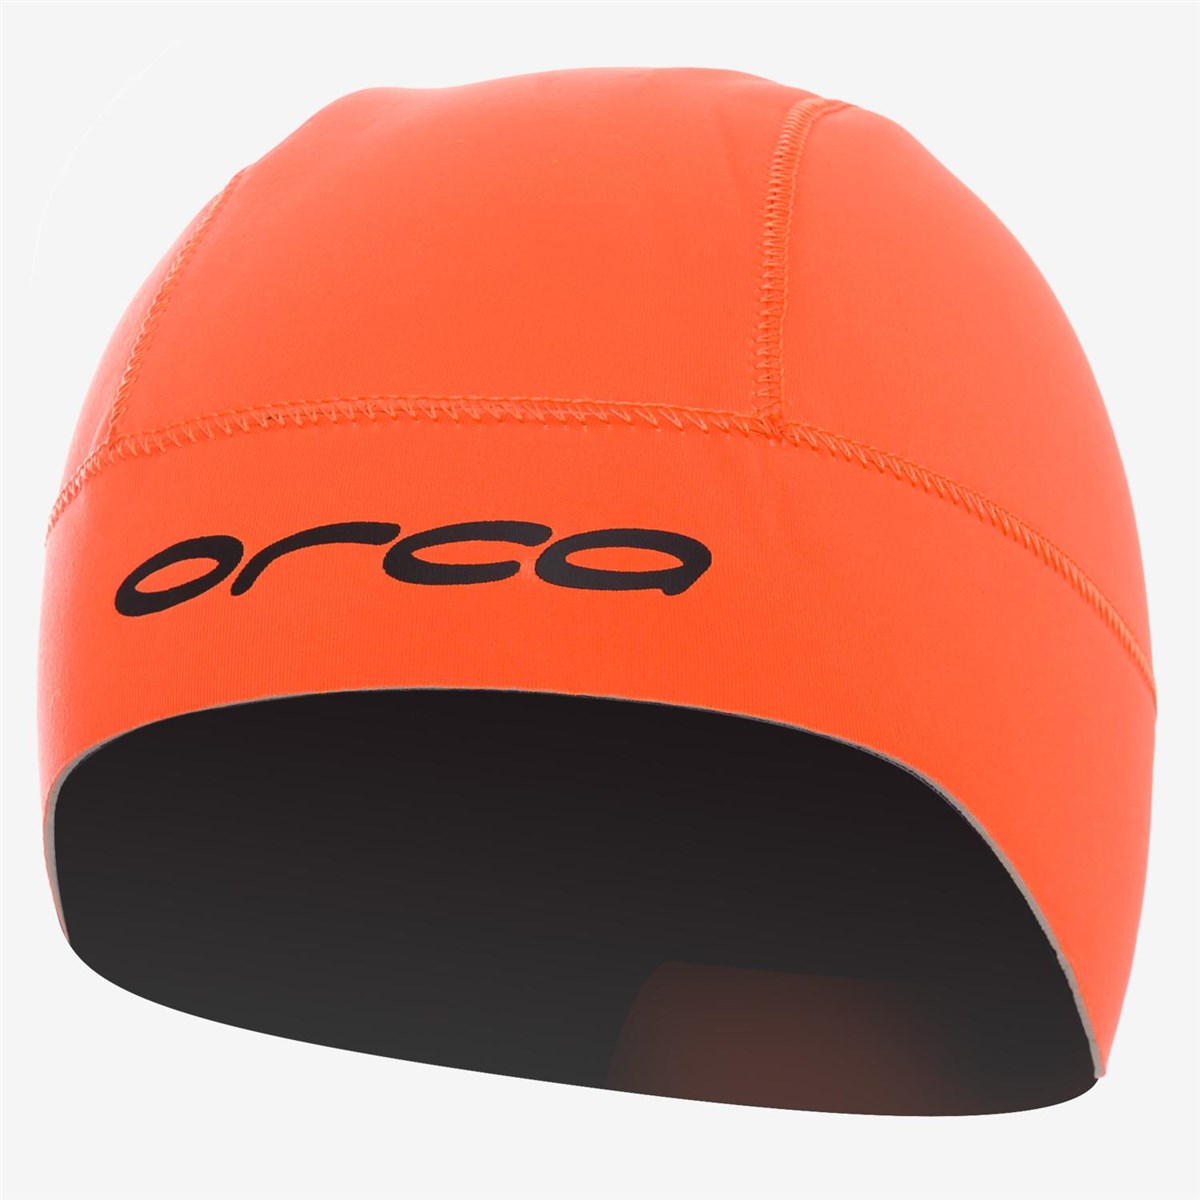 Orca Swim Hat product image